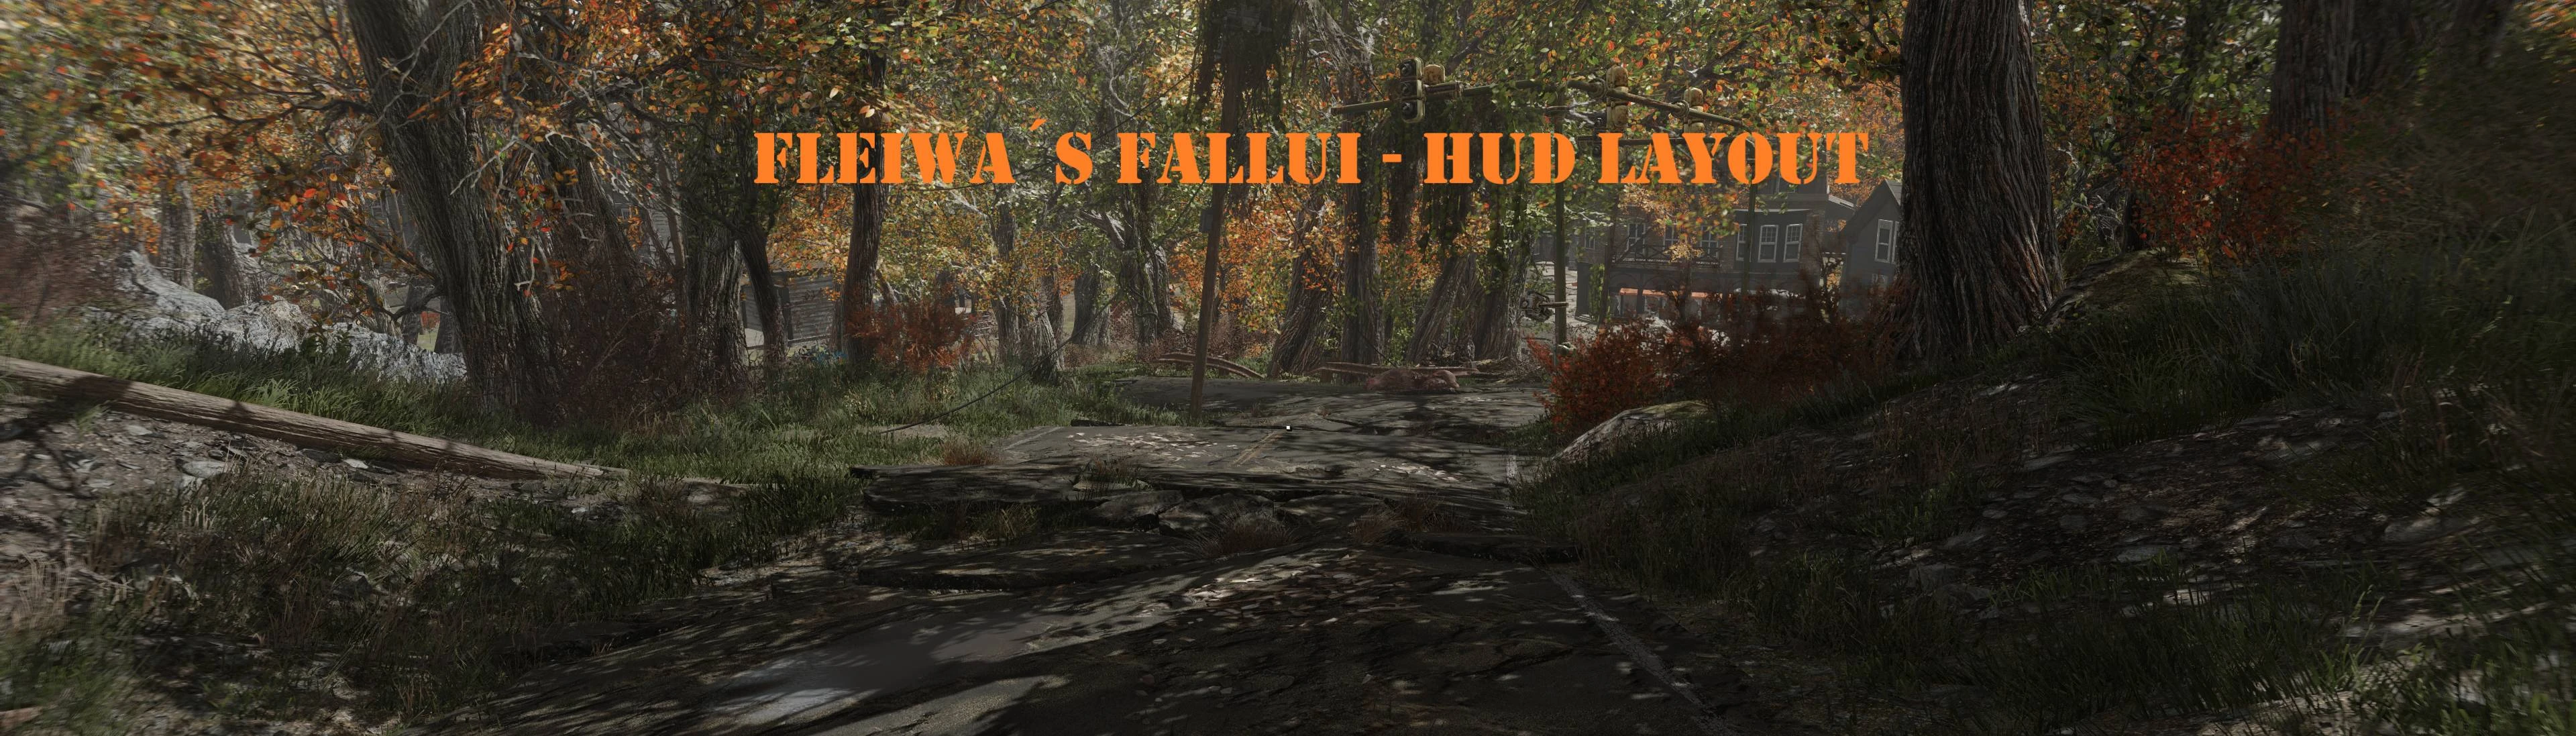 Fallout New Vegas - A FallUI HUD layout at Fallout 4 Nexus - Mods